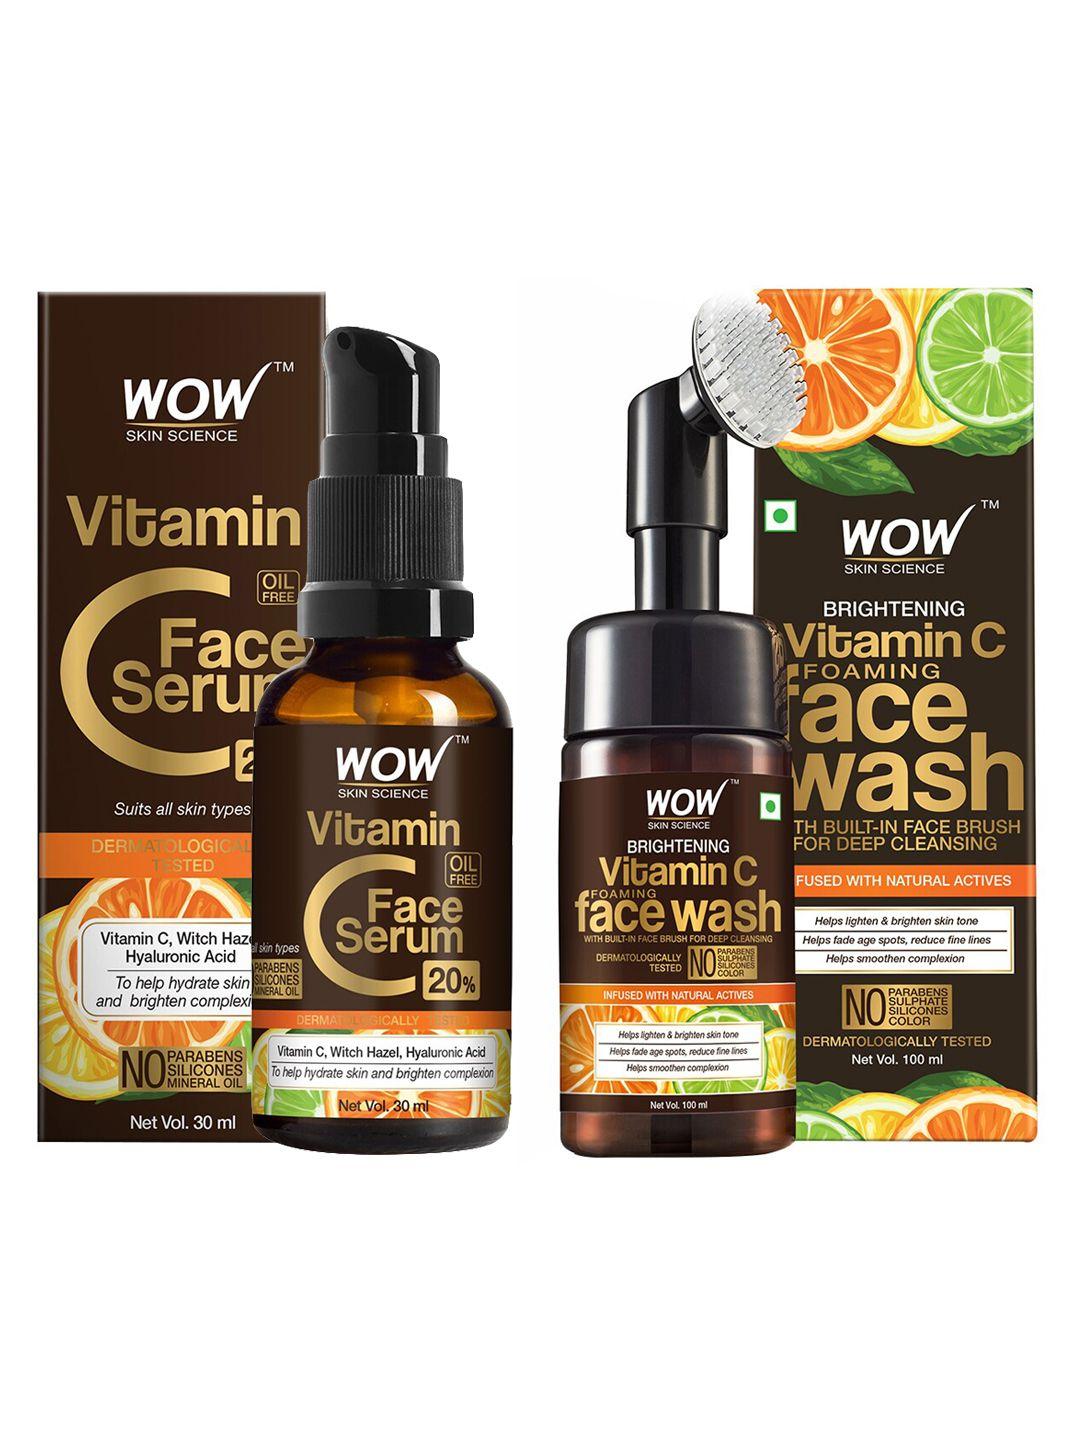 wow skin science unisex set of vitamin c face wash & vitamin c face serum - 130 ml